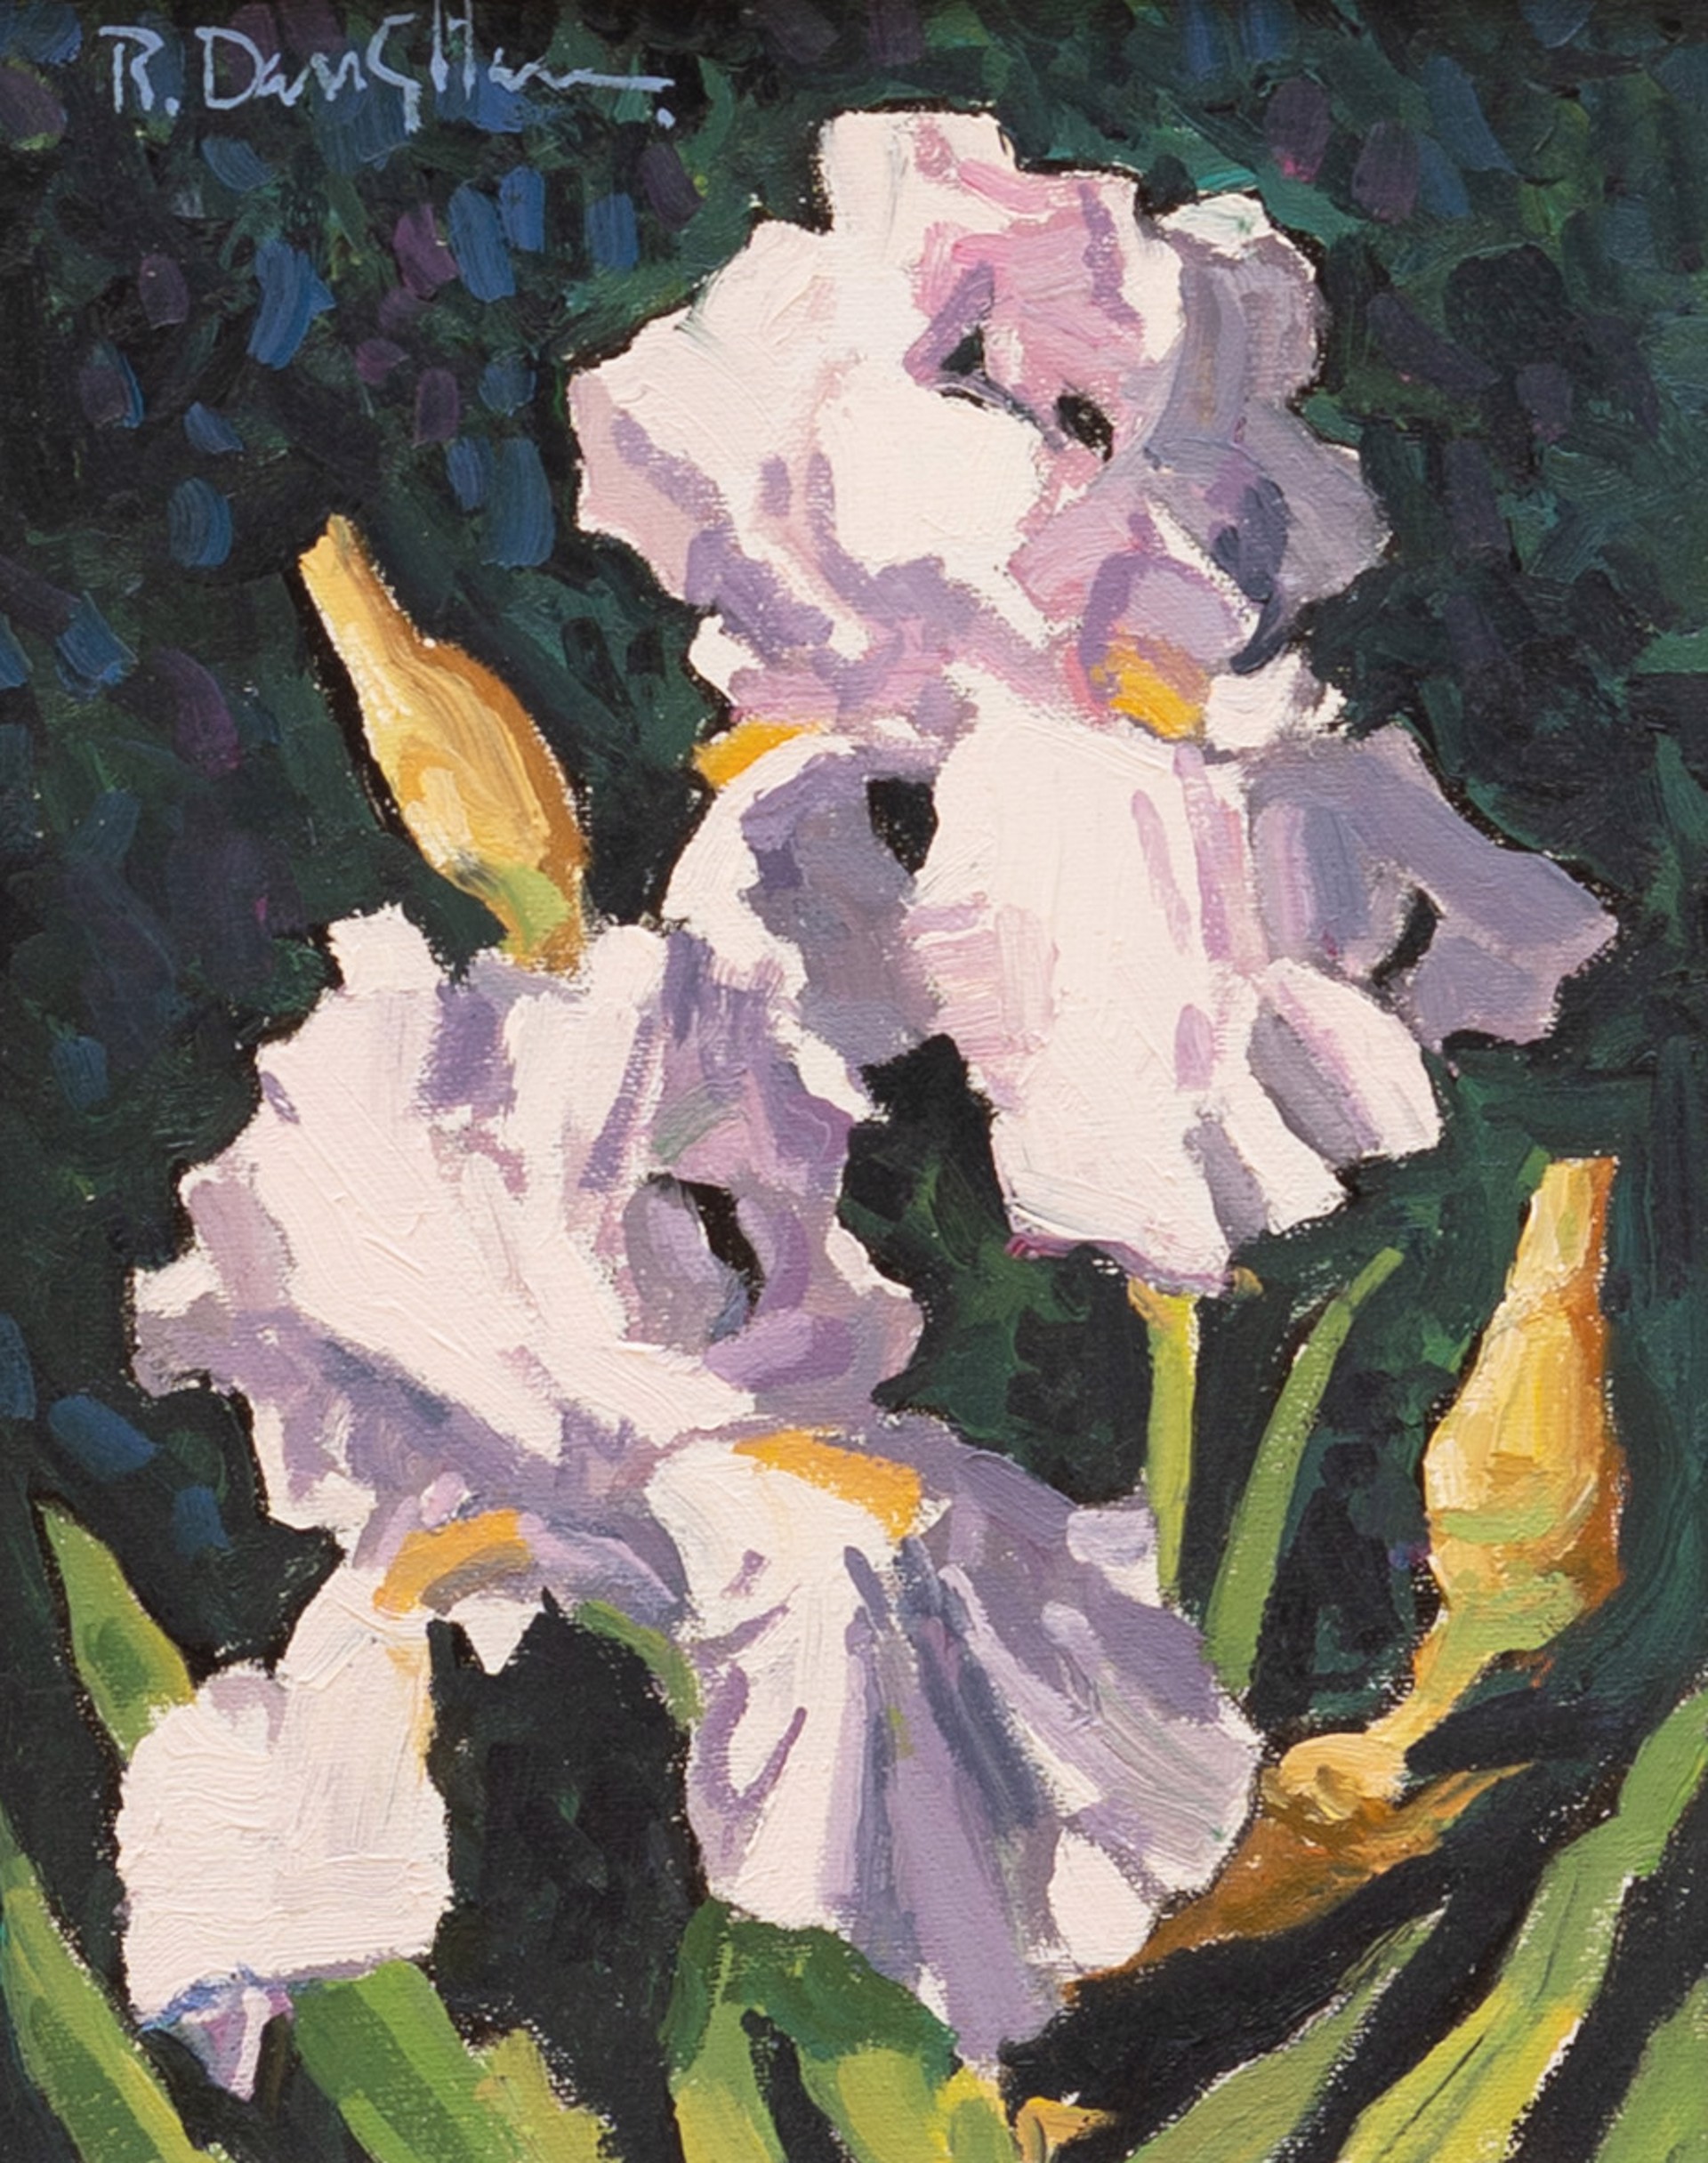 Lavender Iris by Robert Daughters (1929-2013)